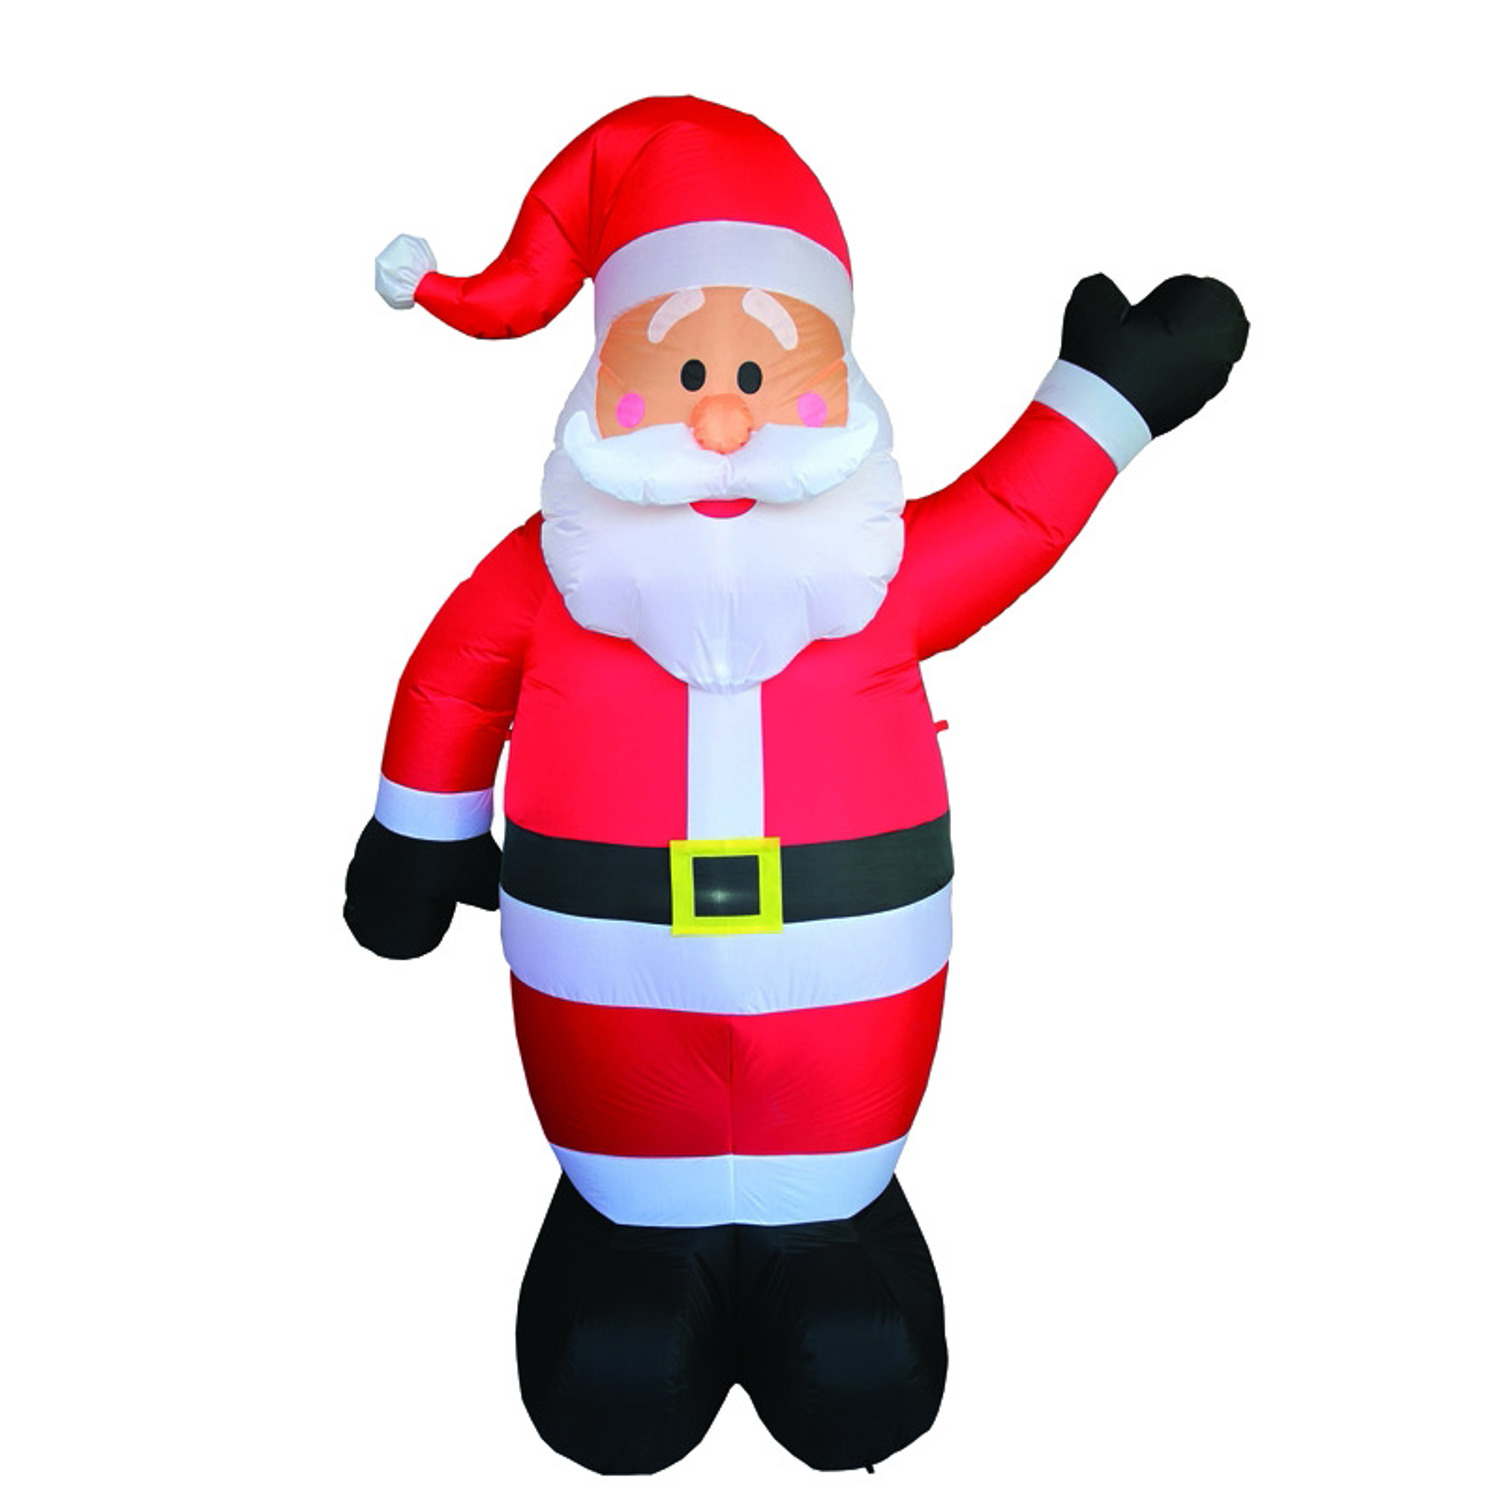 Celebrations Inflatable Santa Claus 8 ft. - Ace Hardware